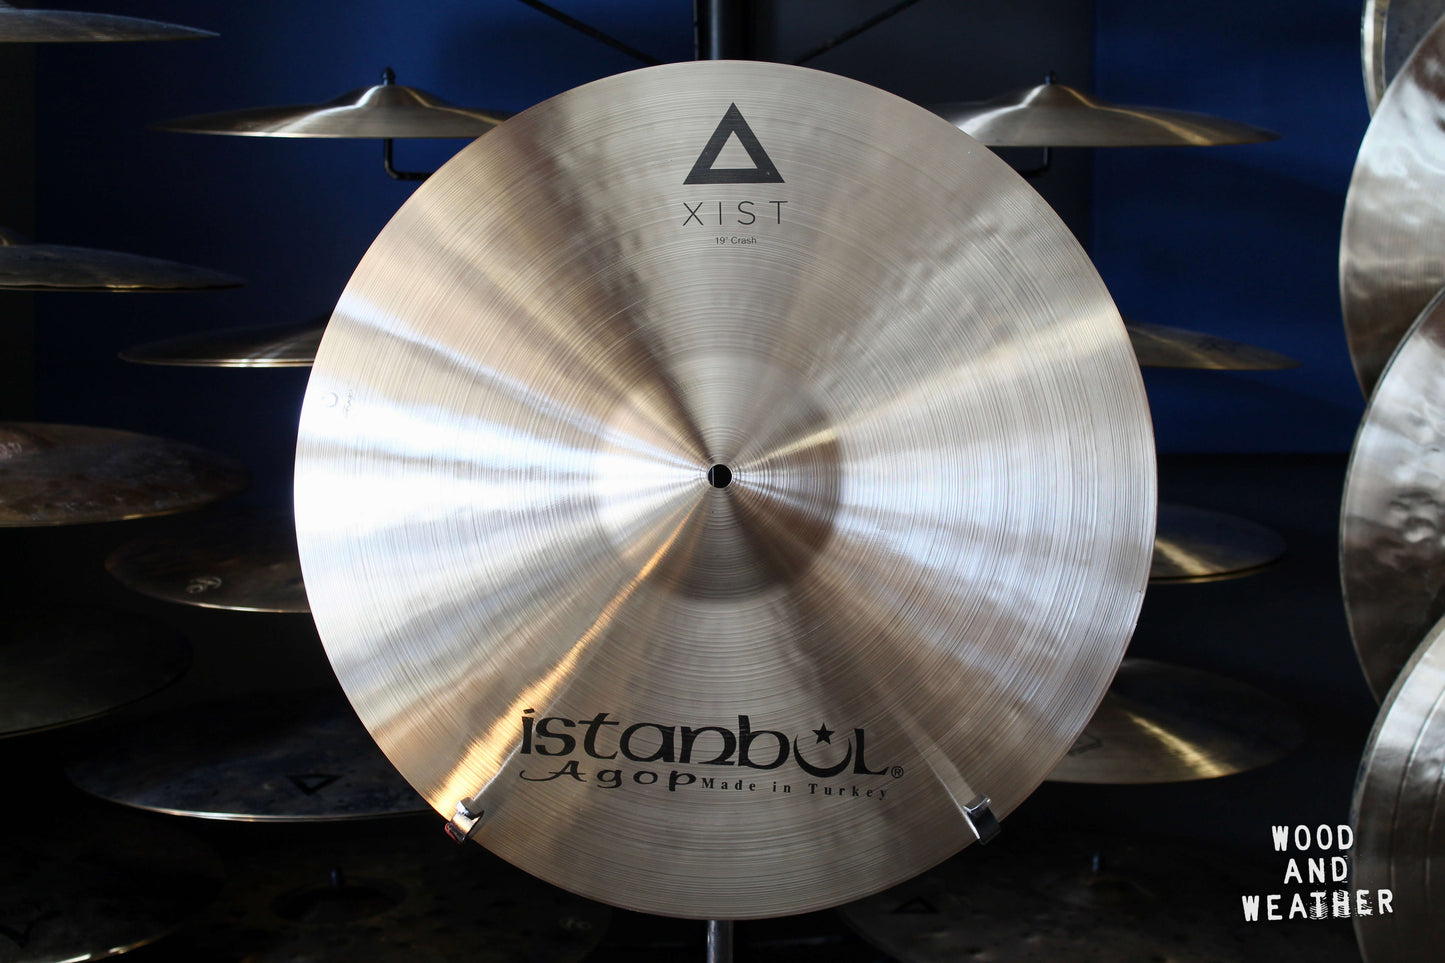 Istanbul Agop 19" Xist Natural Crash Cymbal 1605g